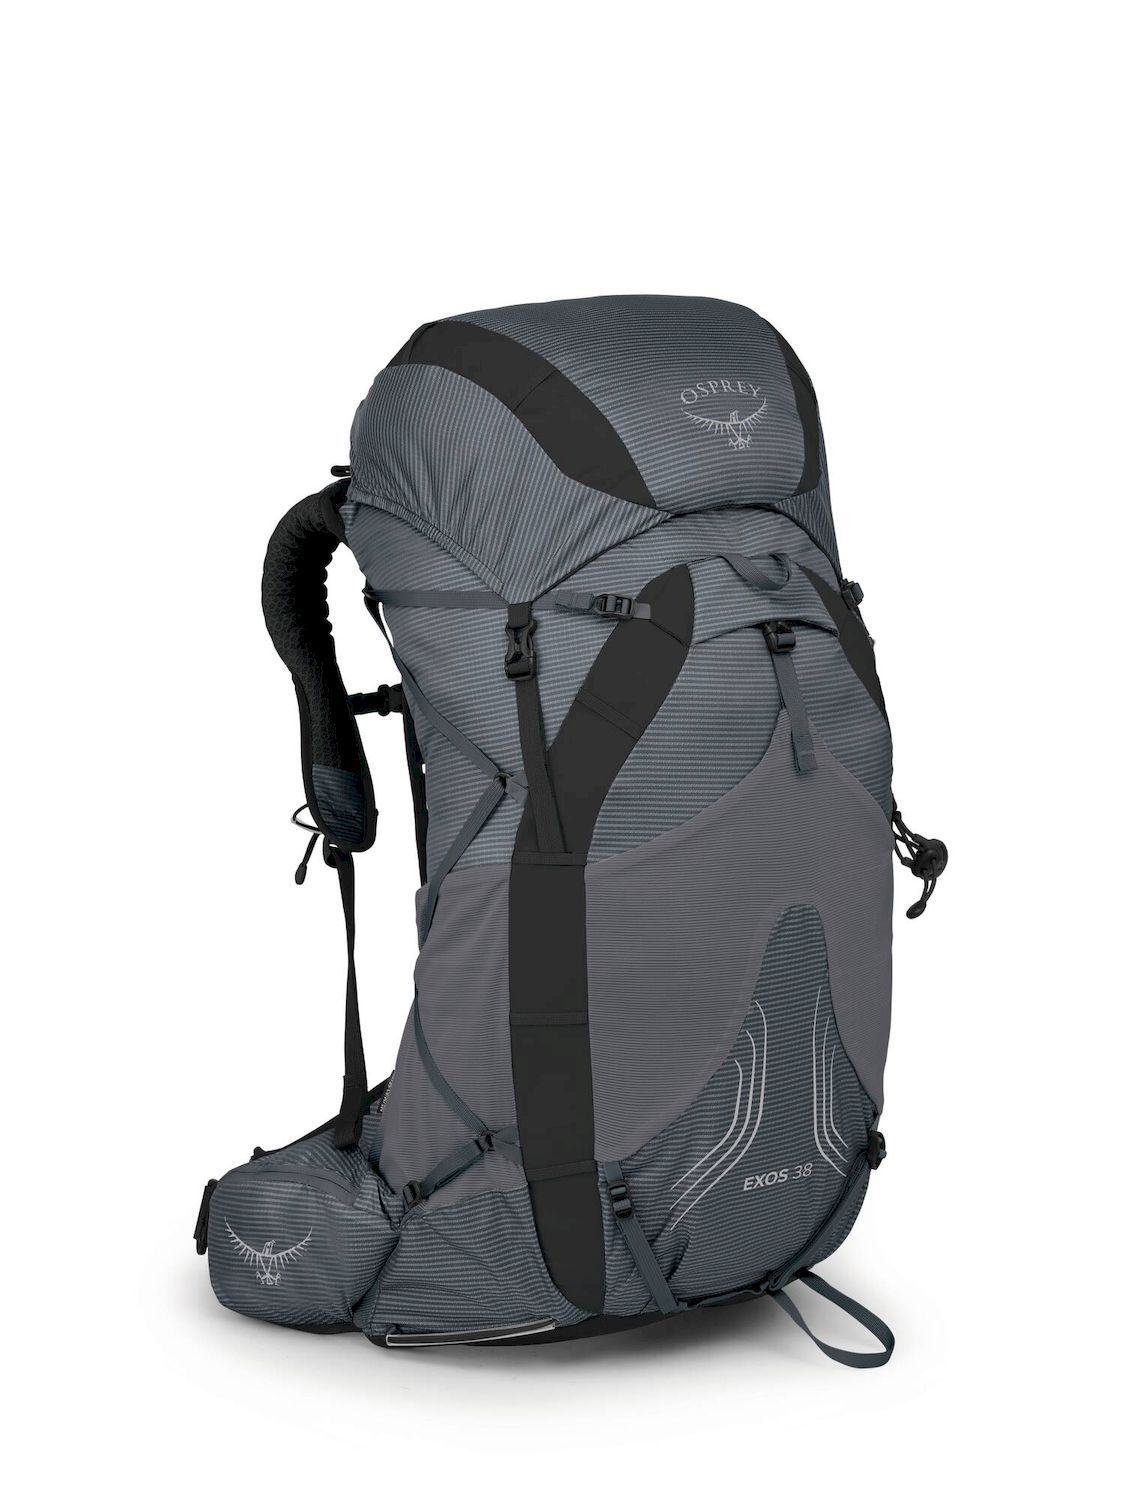 Osprey Exos 38 - Hiking backpack - Men's